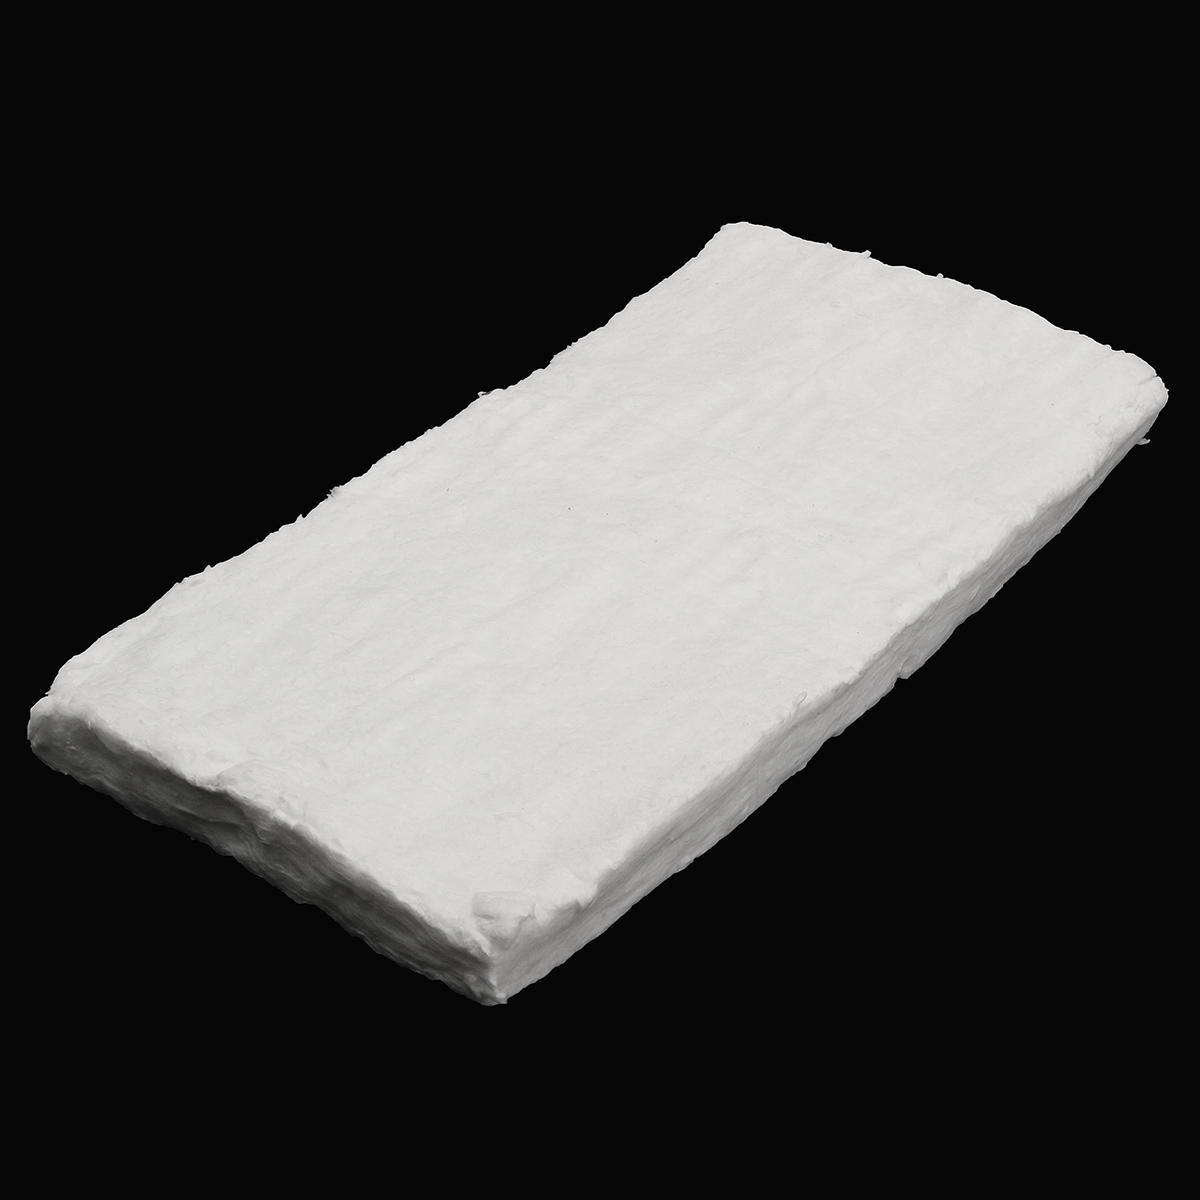 24x12x2 Inch Aluminum Silicate Pad High Temperature Insulation Ceramic Fiber Blanket